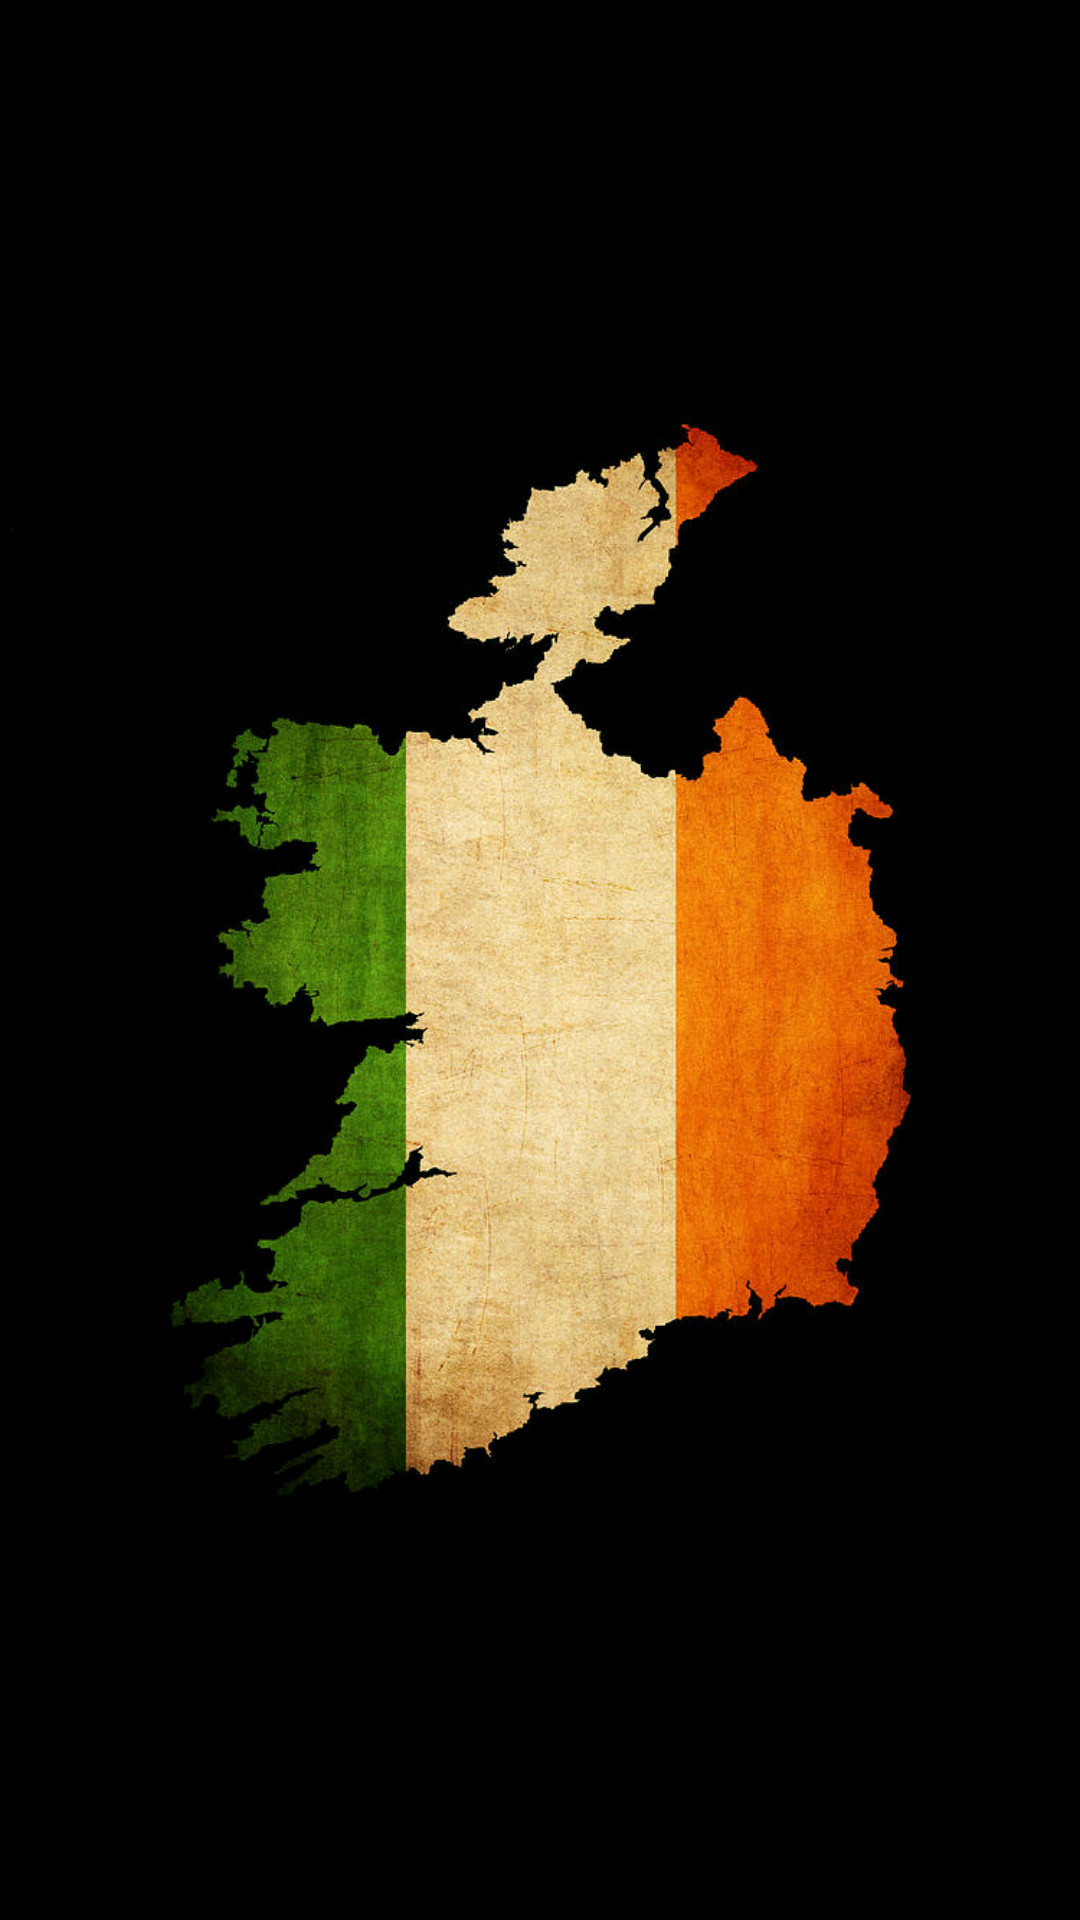 1080x1920 1920x1080 Free Ireland Wallpapers - WallpaperSafari